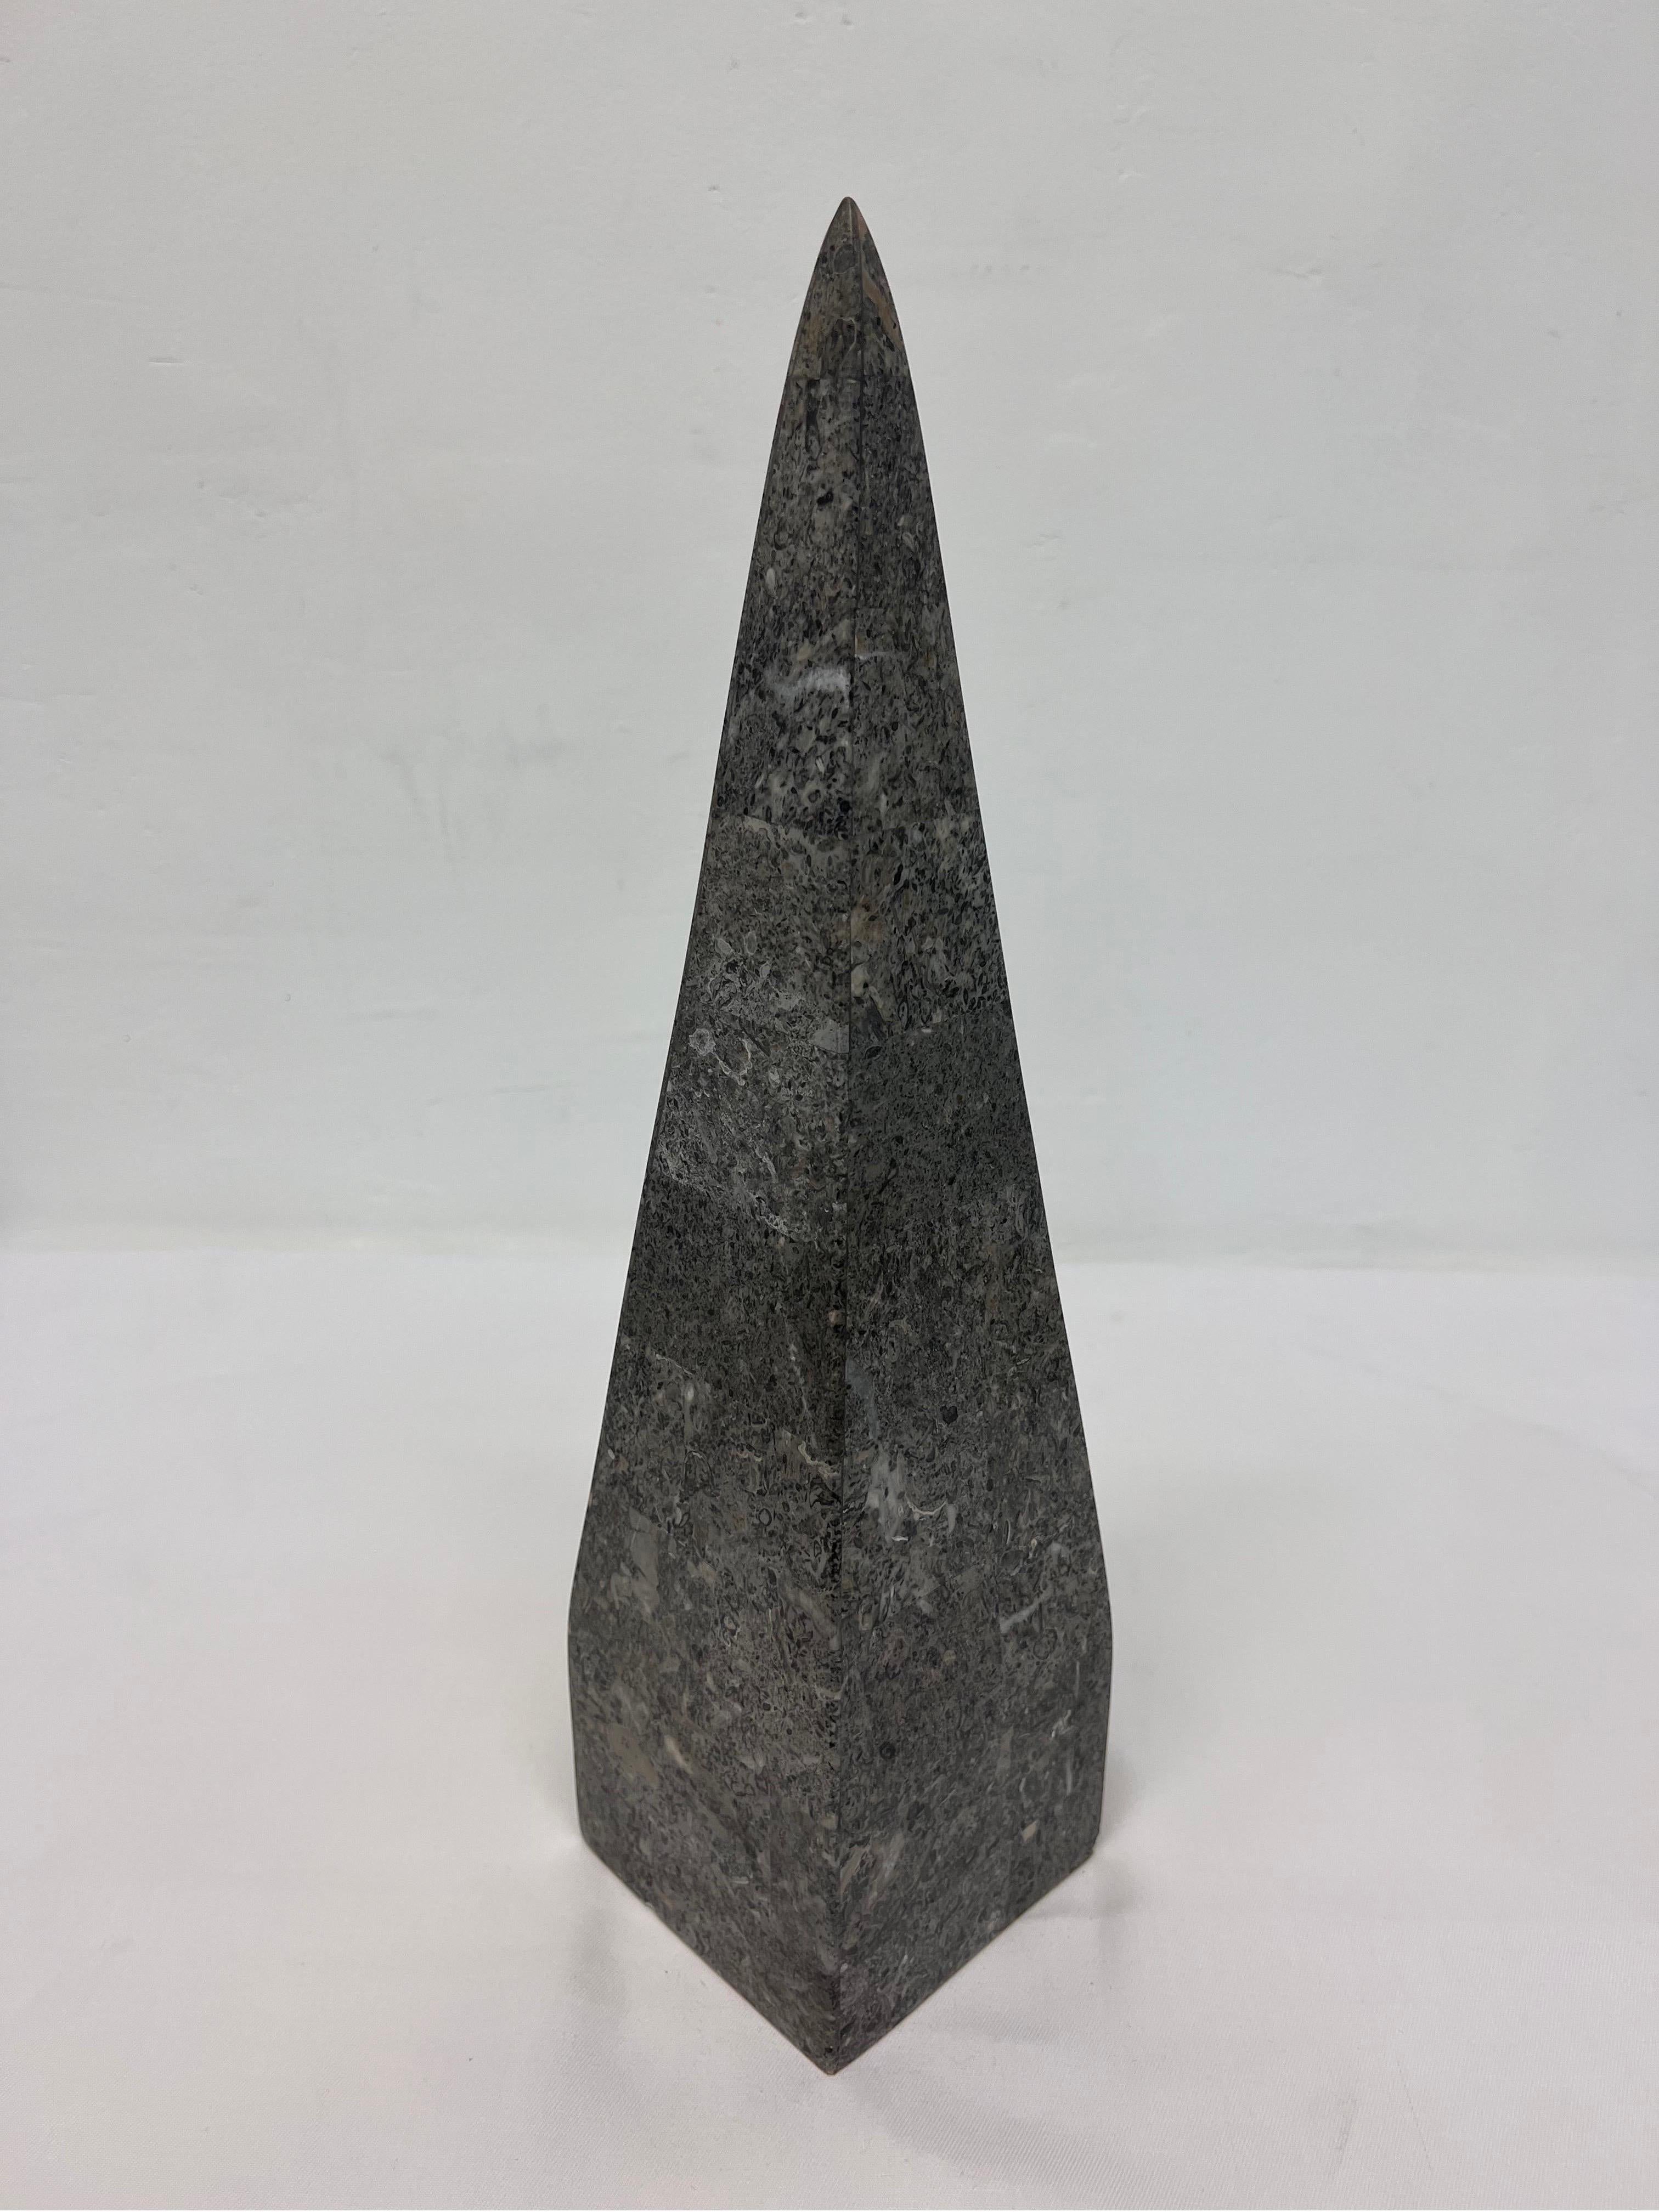 Tessellated Stone Obelisk In Good Condition For Sale In Miami, FL